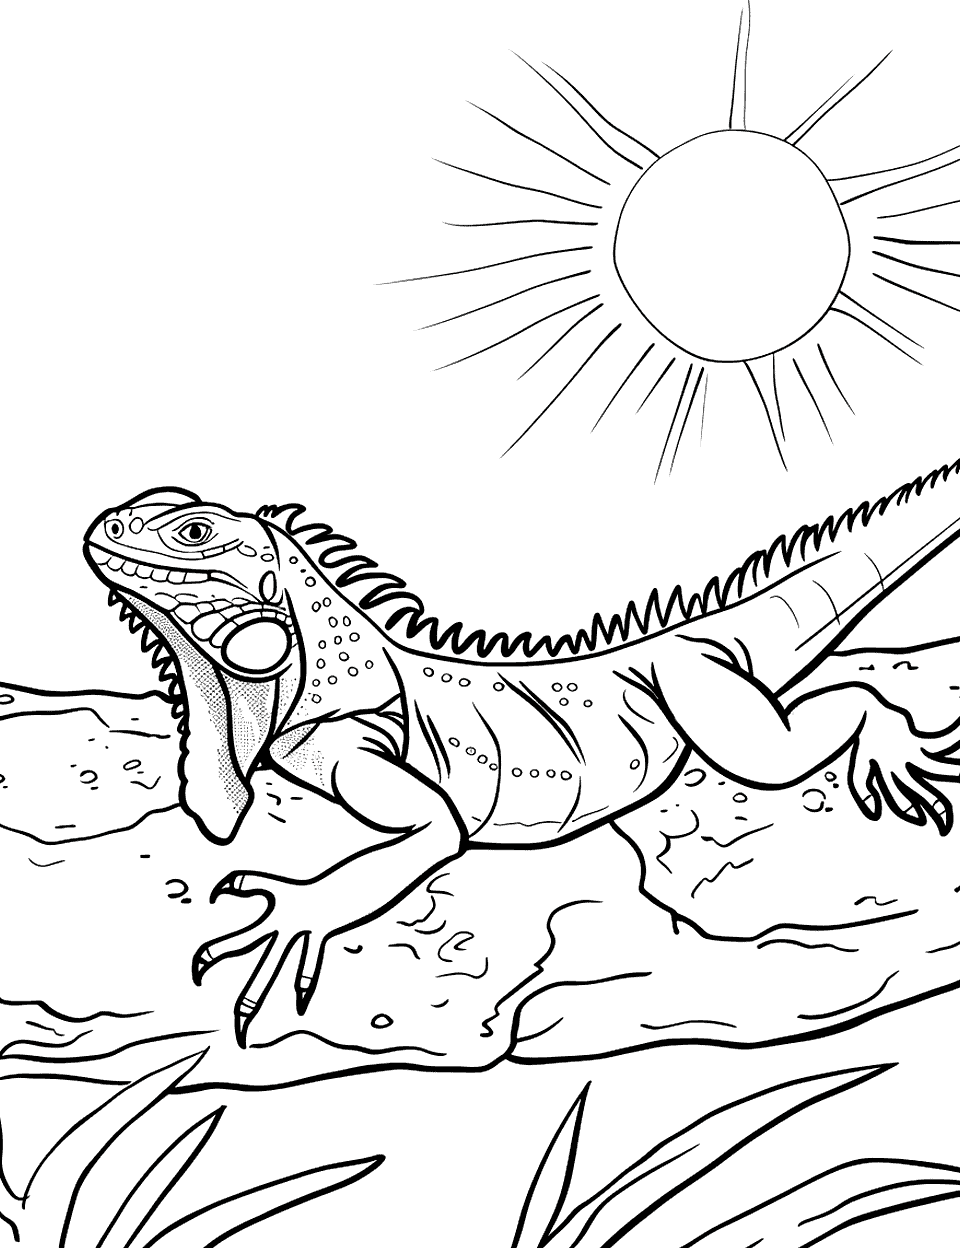 Iguana Sunbathing Lizard Coloring Page - An iguana lying lazily on a rock under the bright sun.